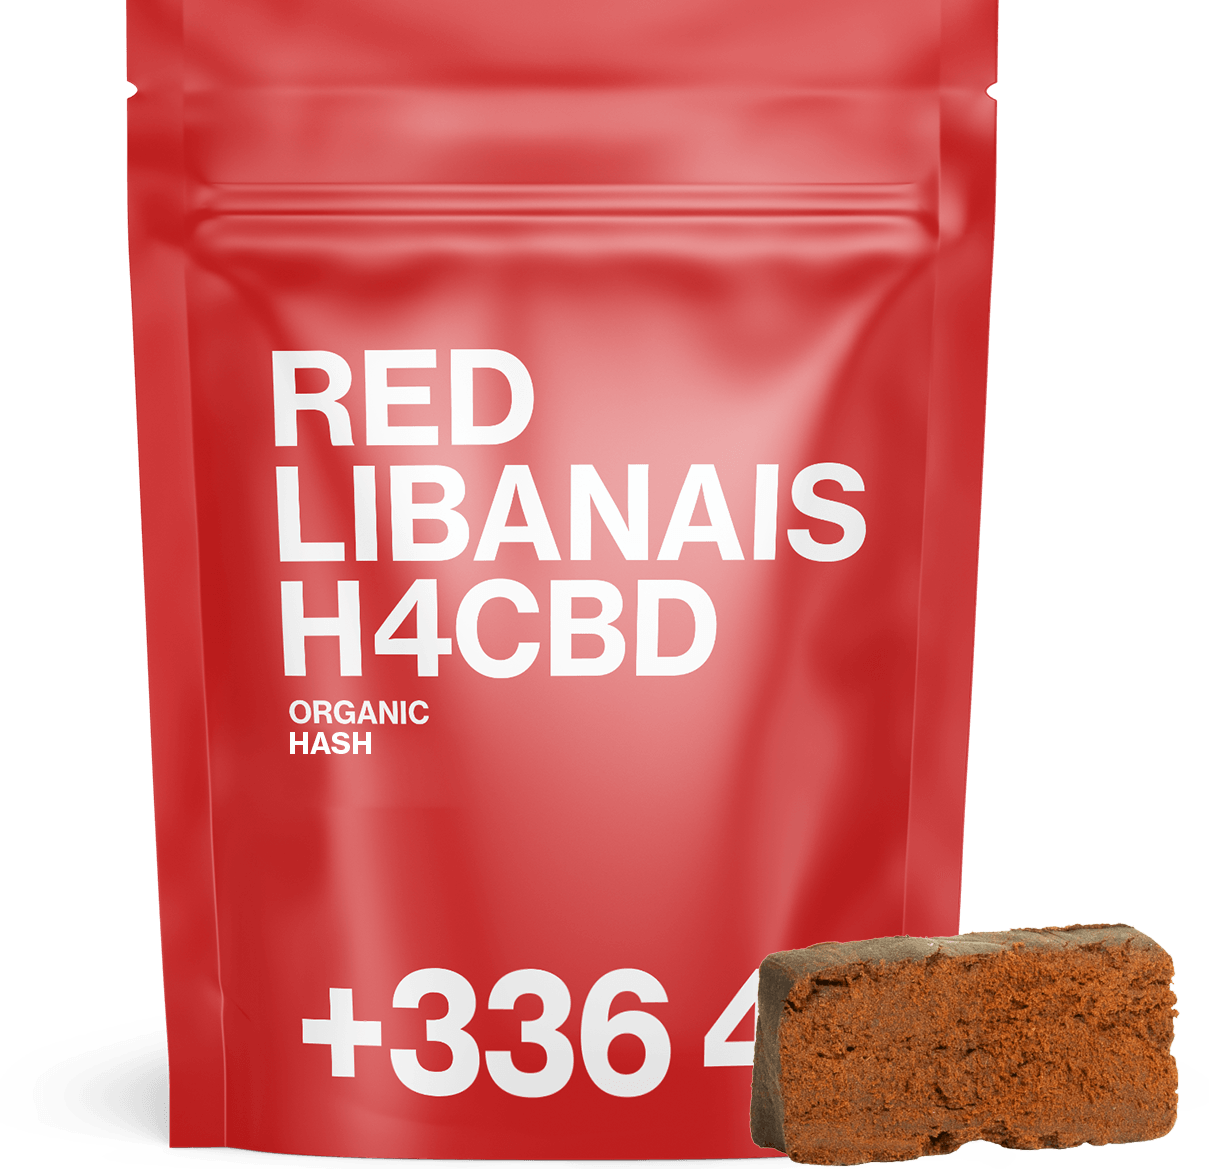 Red Lebanese H4CBD 🌹